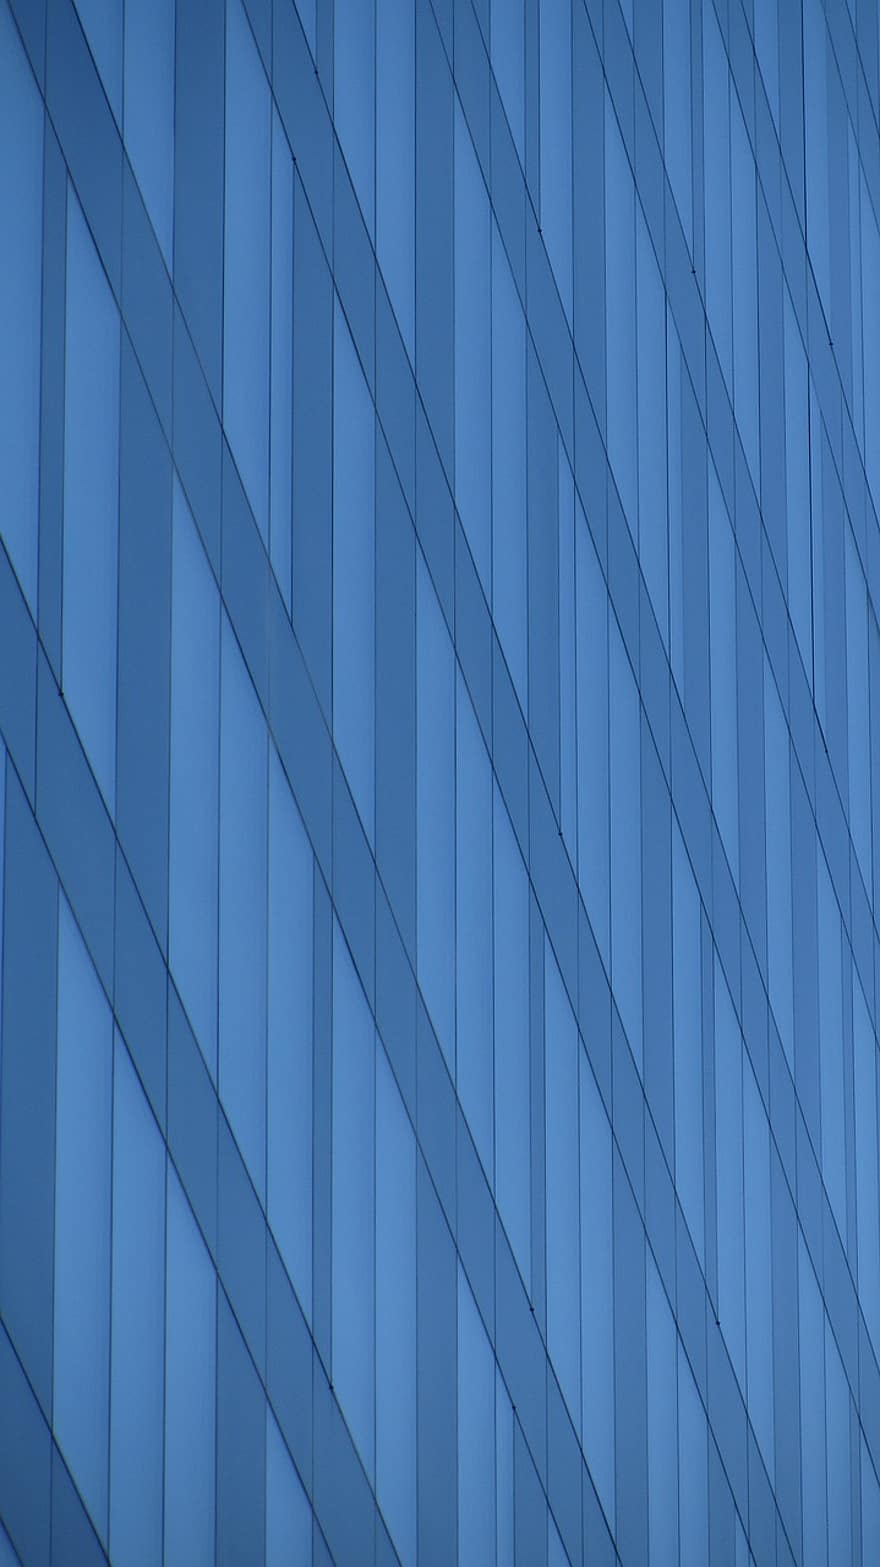 kontorbygg, vindu, moderne, slants, linjer, mønster, abstrakt, bakgrunn, arkitektur, design, blå